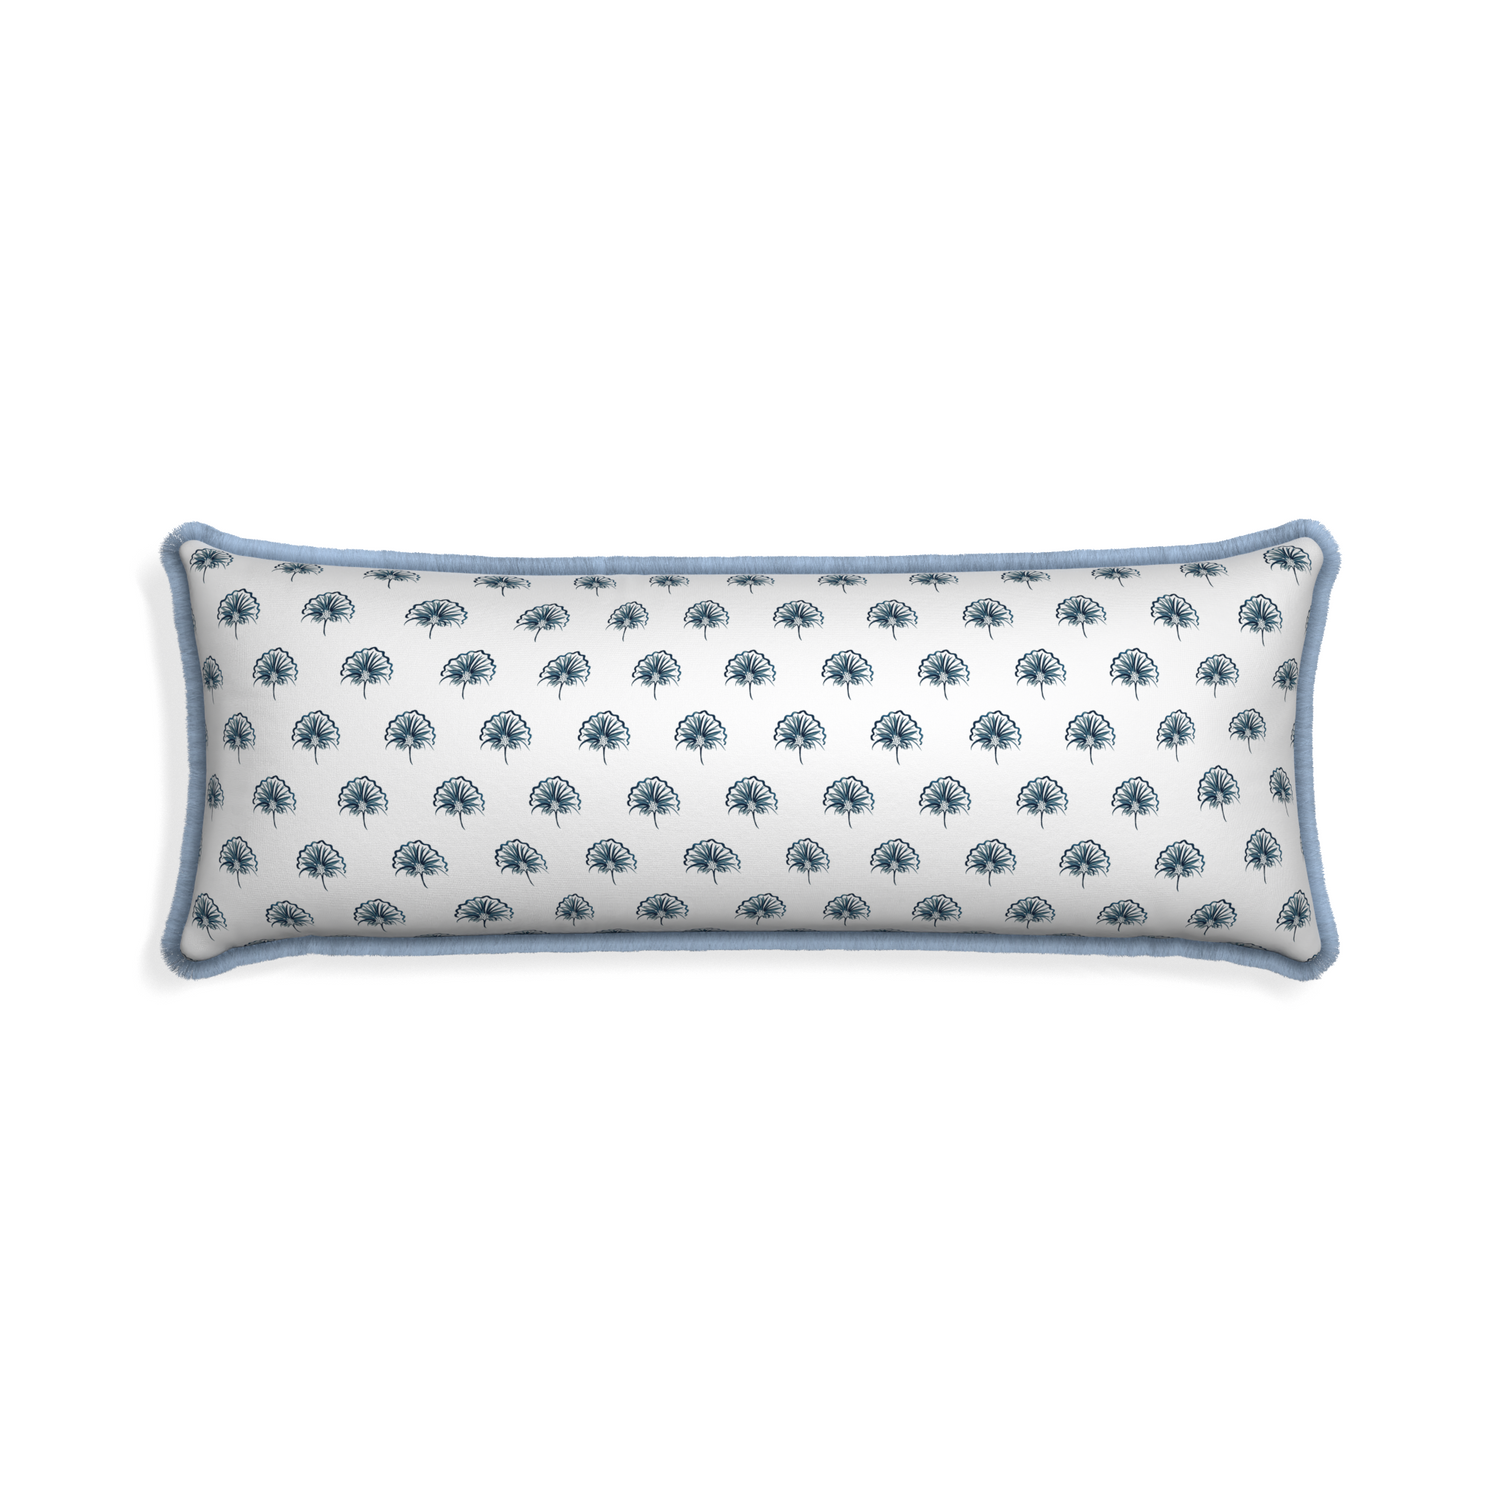 Xl-lumbar penelope midnight custom pillow with sky fringe on white background